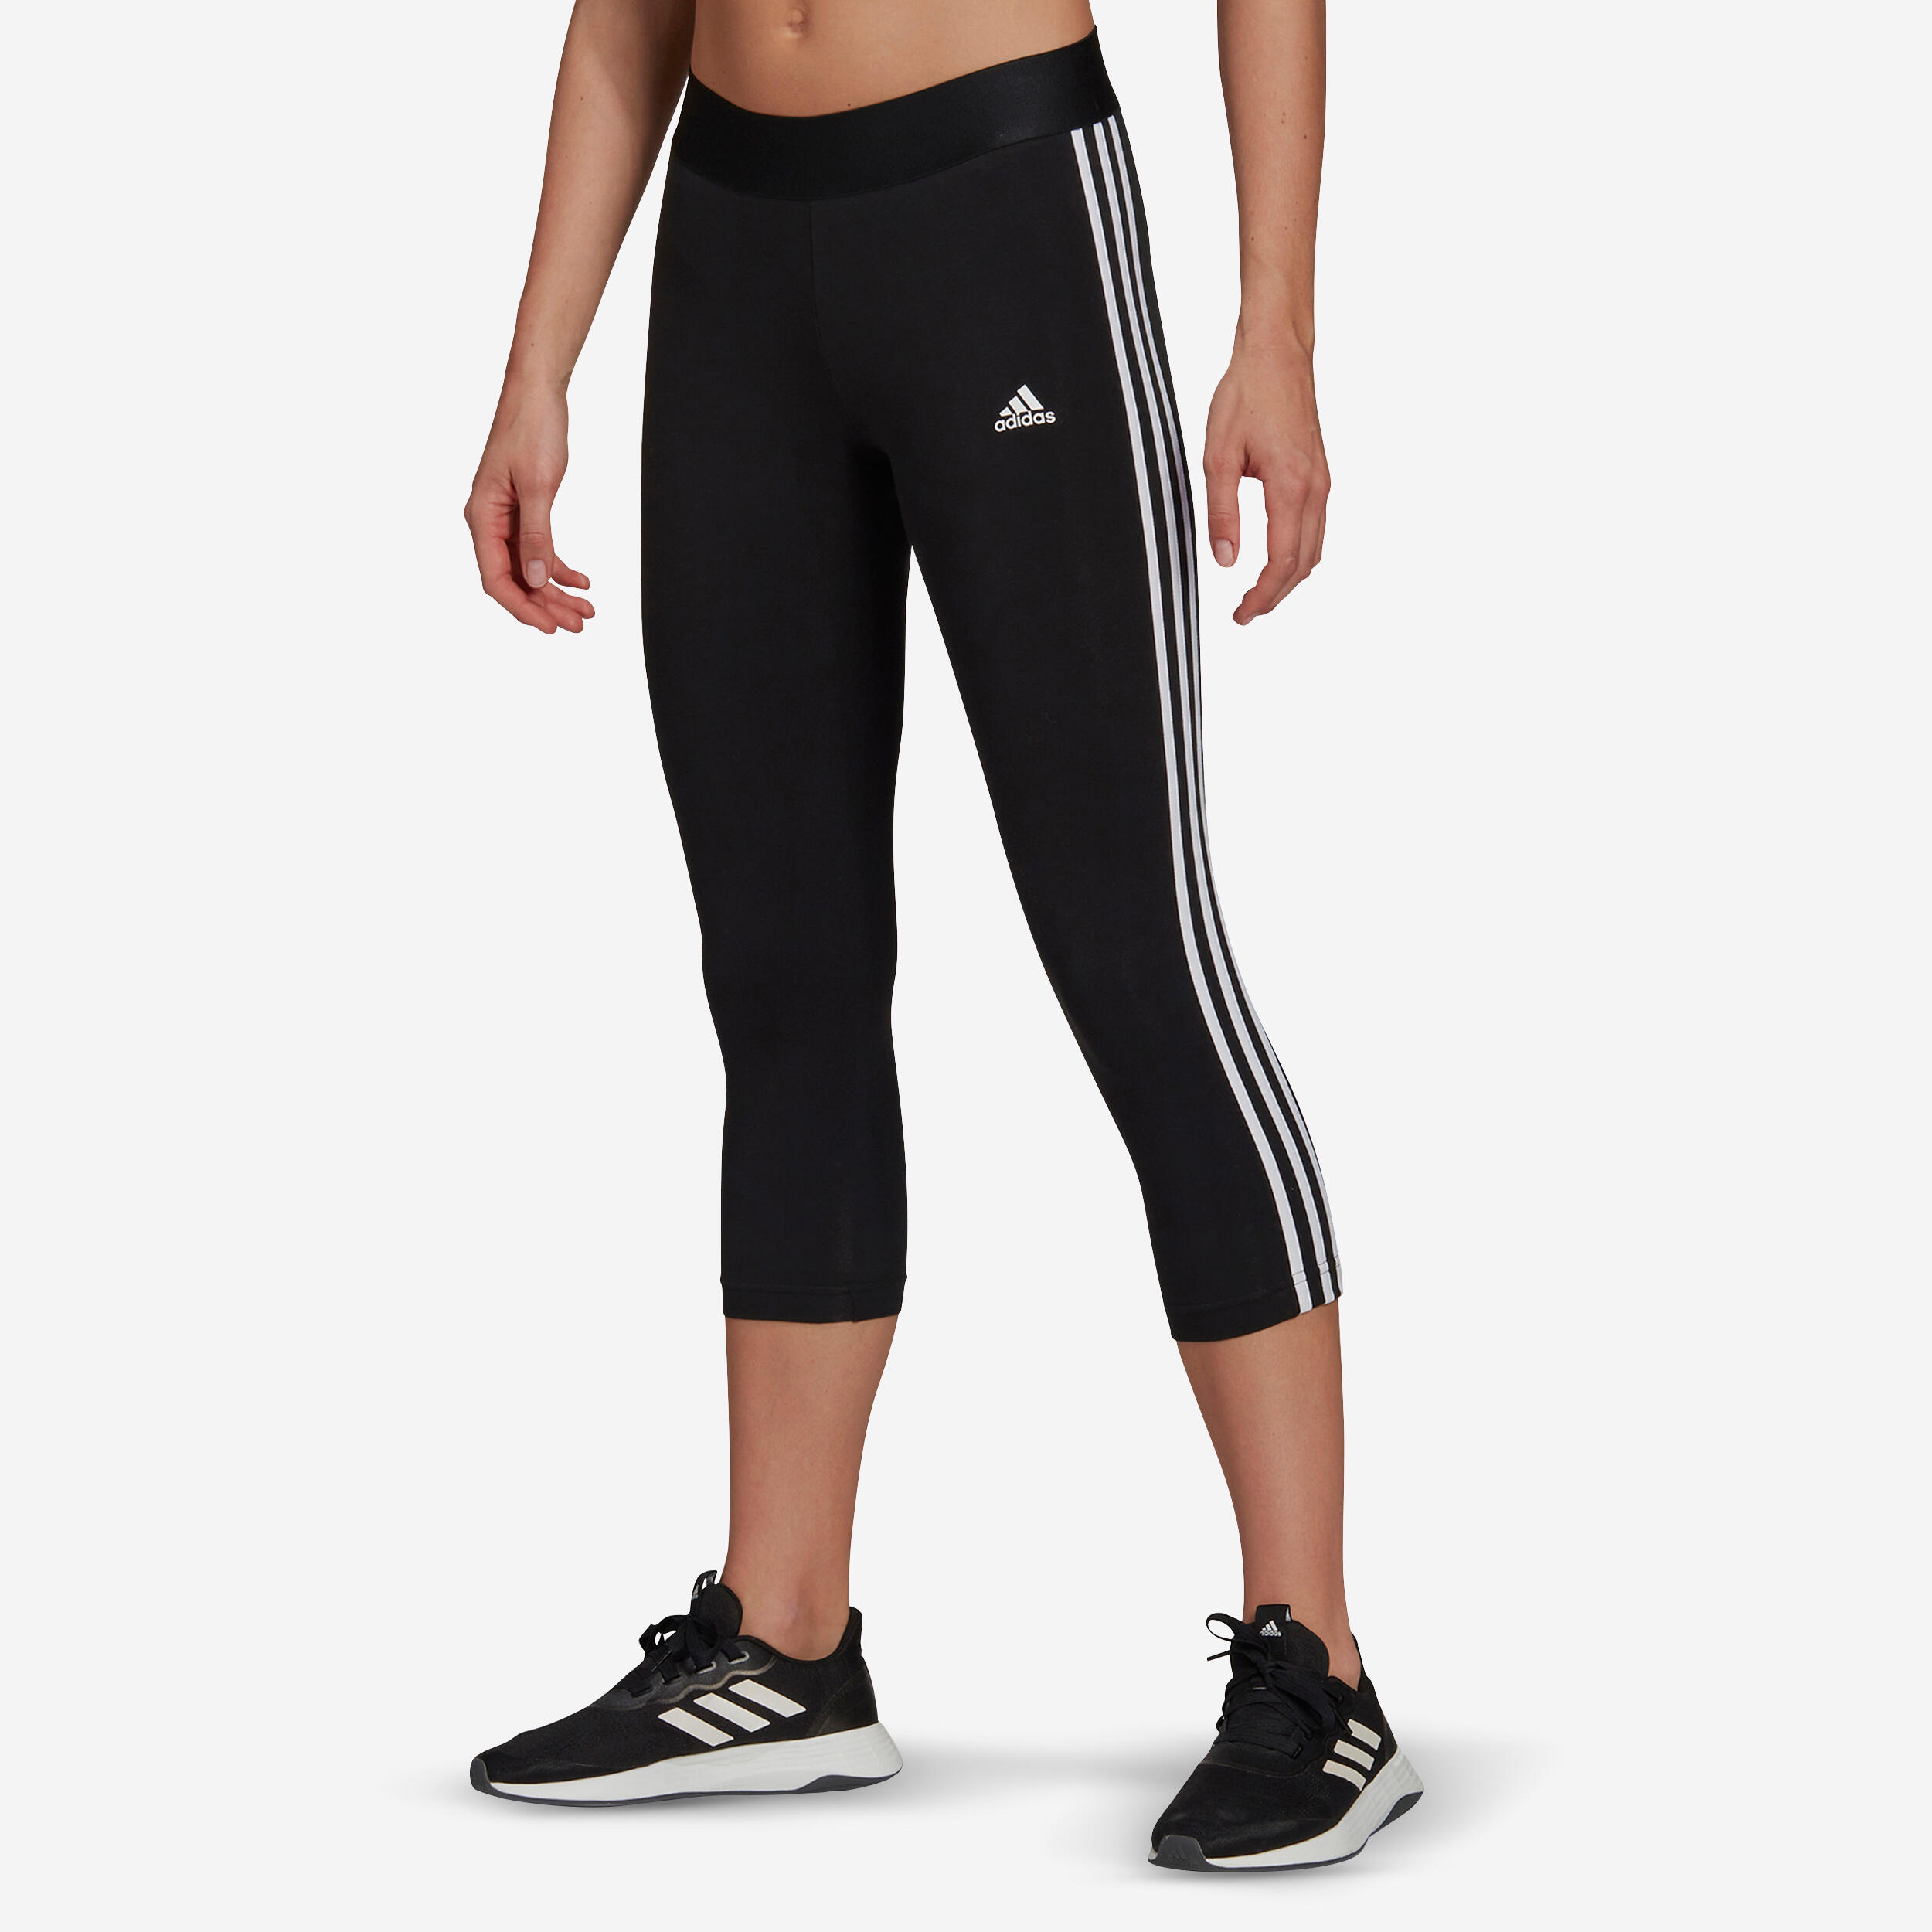 Decathlon | Corsari donna fitness ADIDAS ESSENTIALS cotone leggero nero-bianco |  Adidas